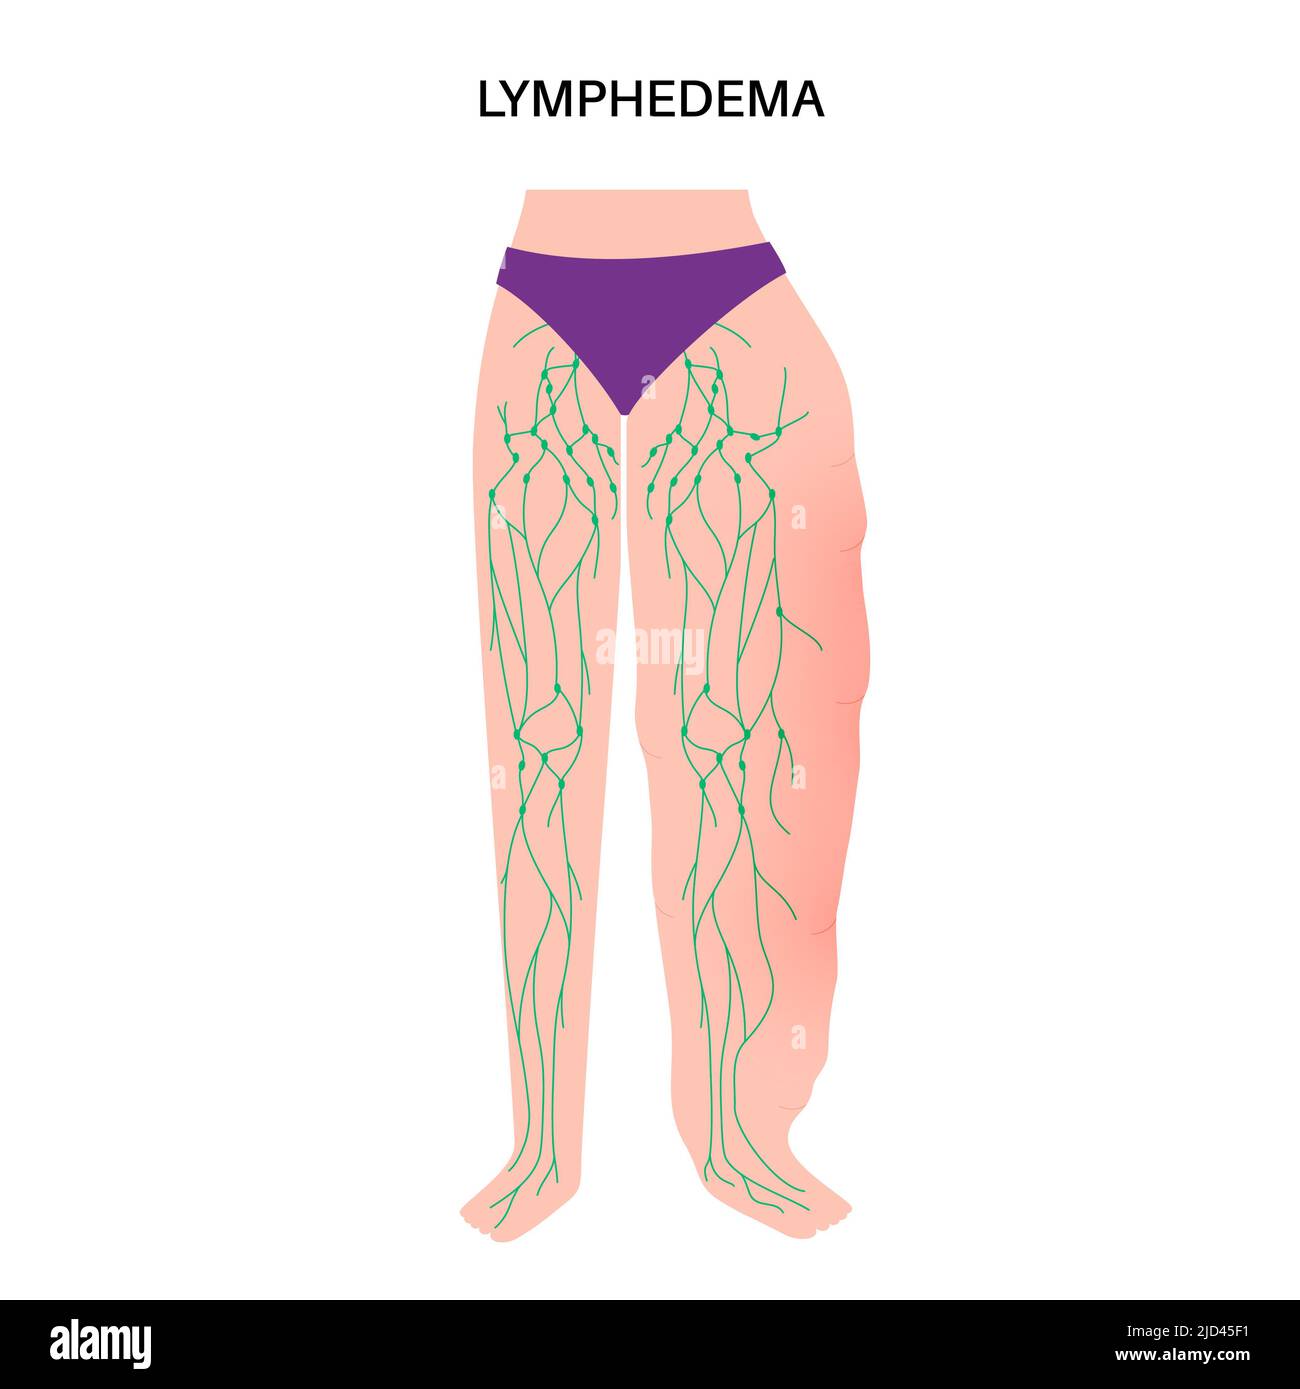 Lymphoedema leg swelling, illustration Stock Photo - Alamy